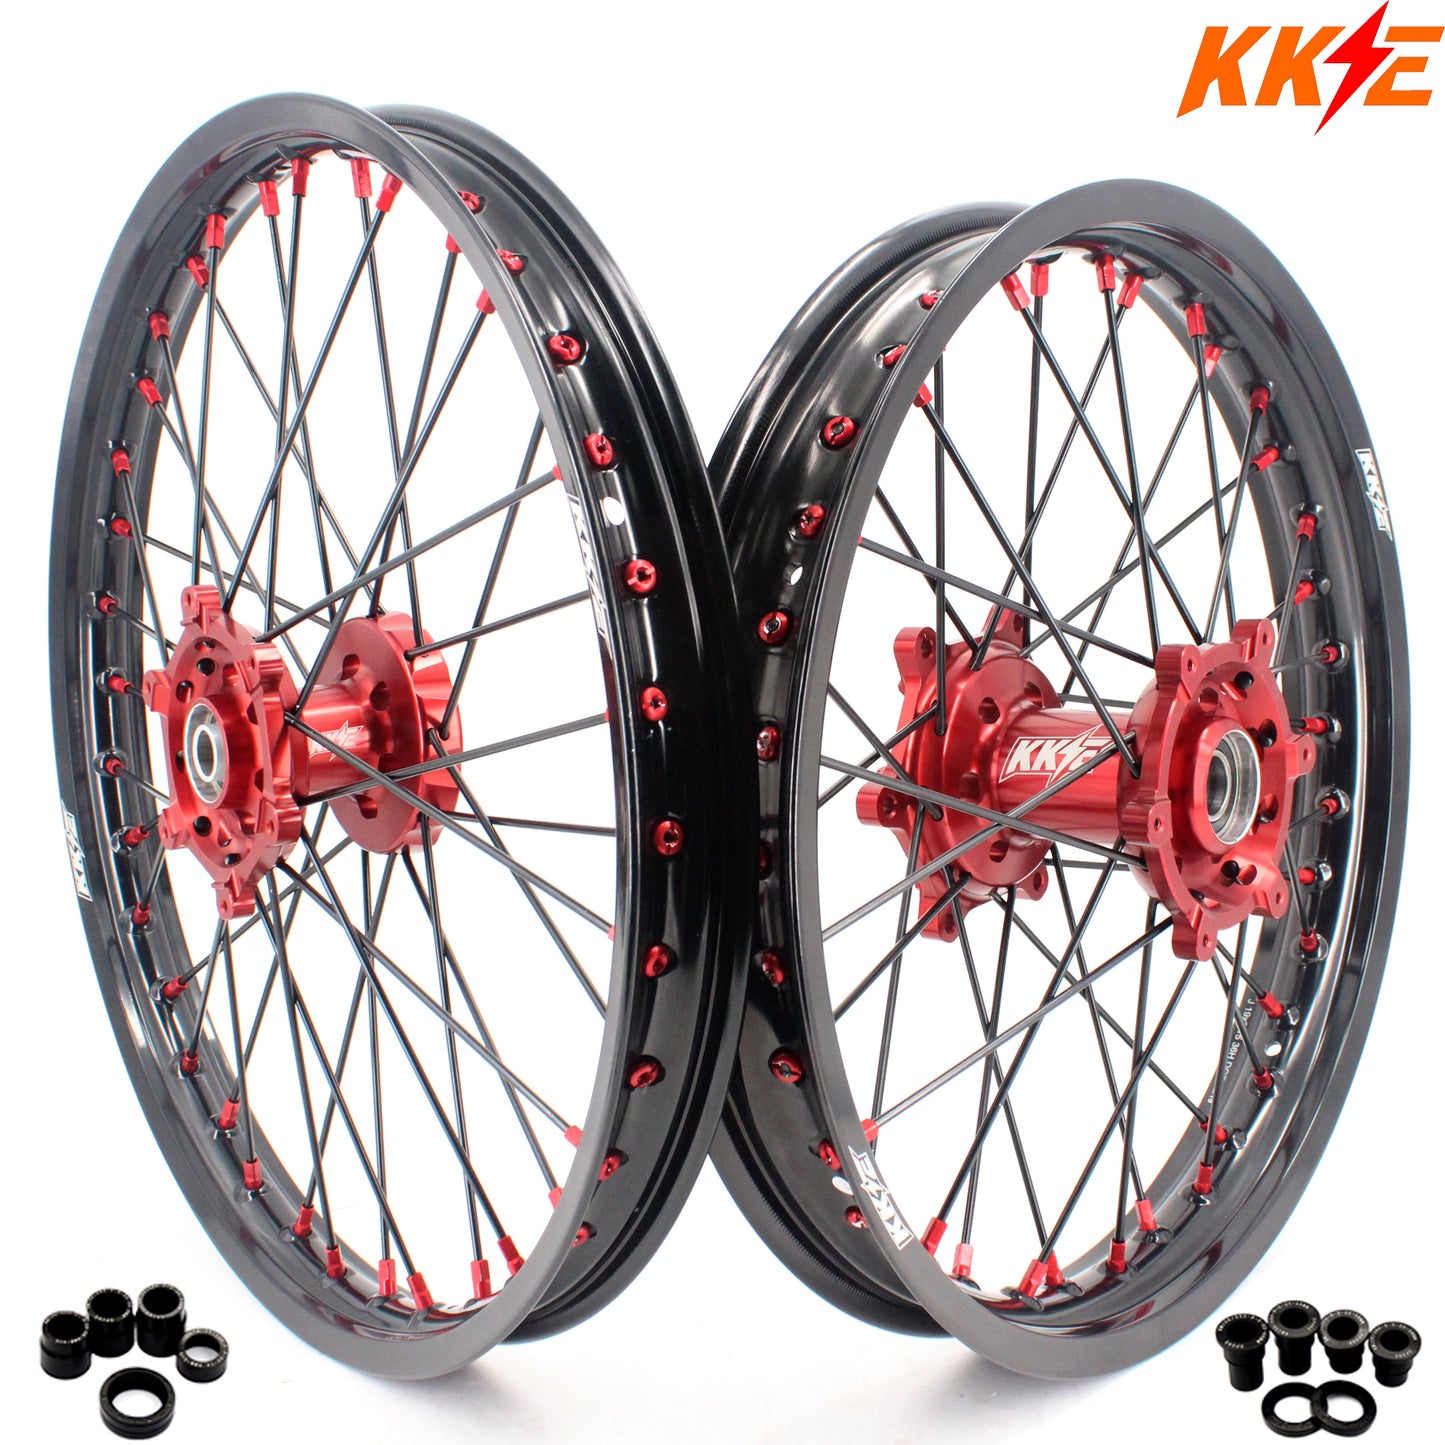 KKE 21 & 19 MX Spoked Race Wheels For SUZUKI RM125 RM250 1996 1997 1998 1999 2000